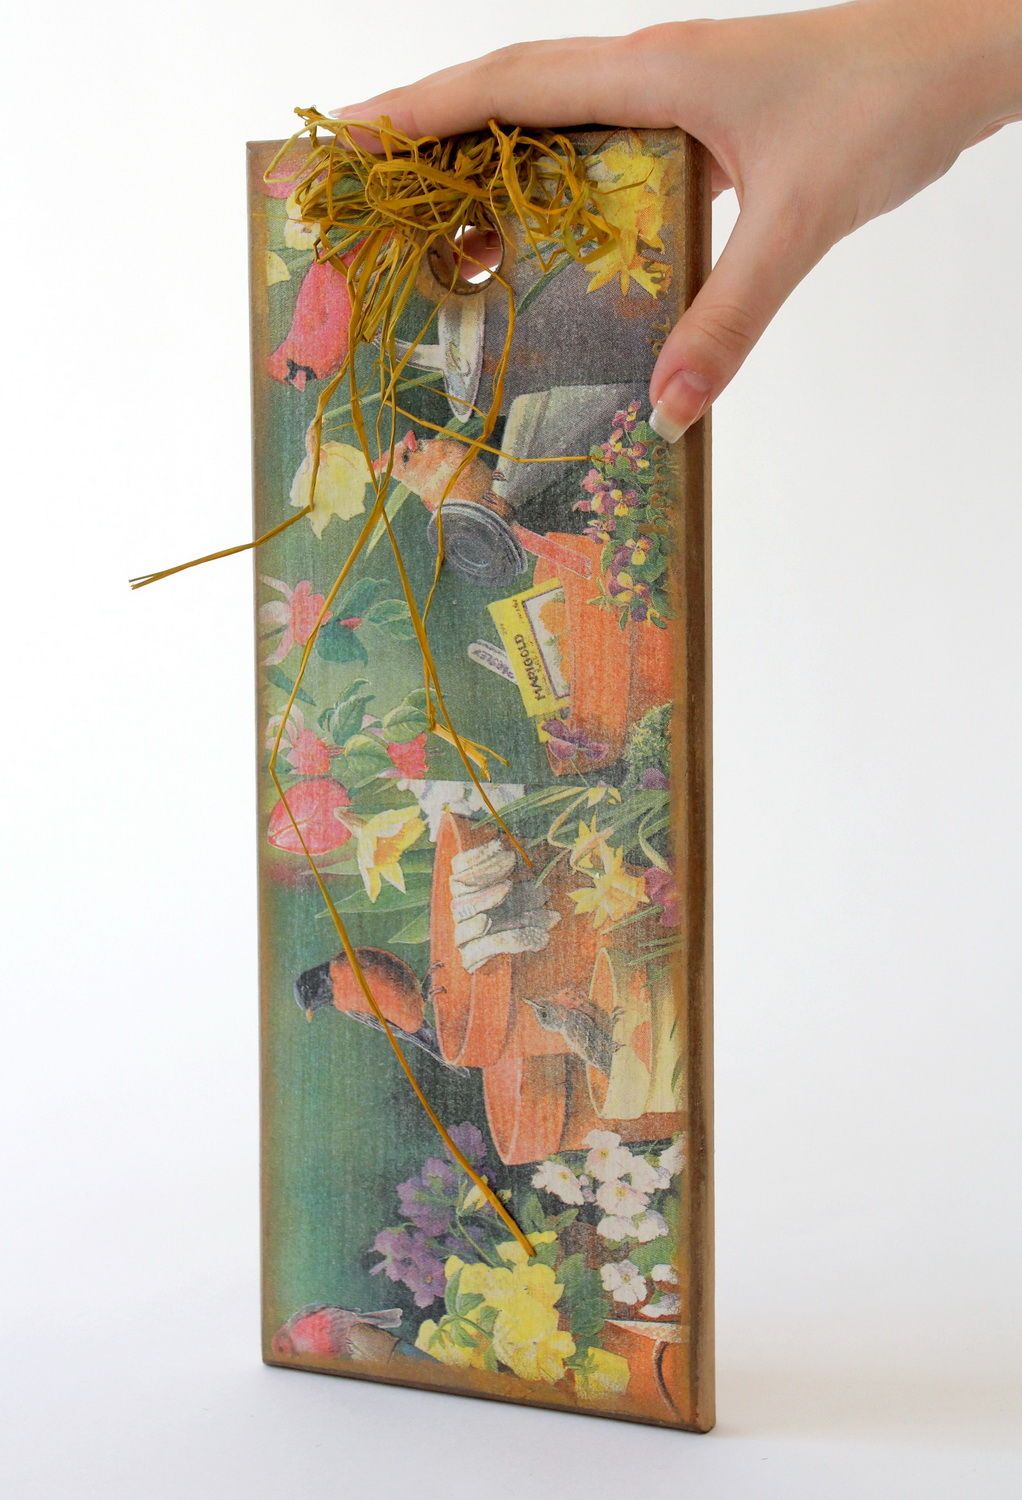 Decorative cutting board photo 4